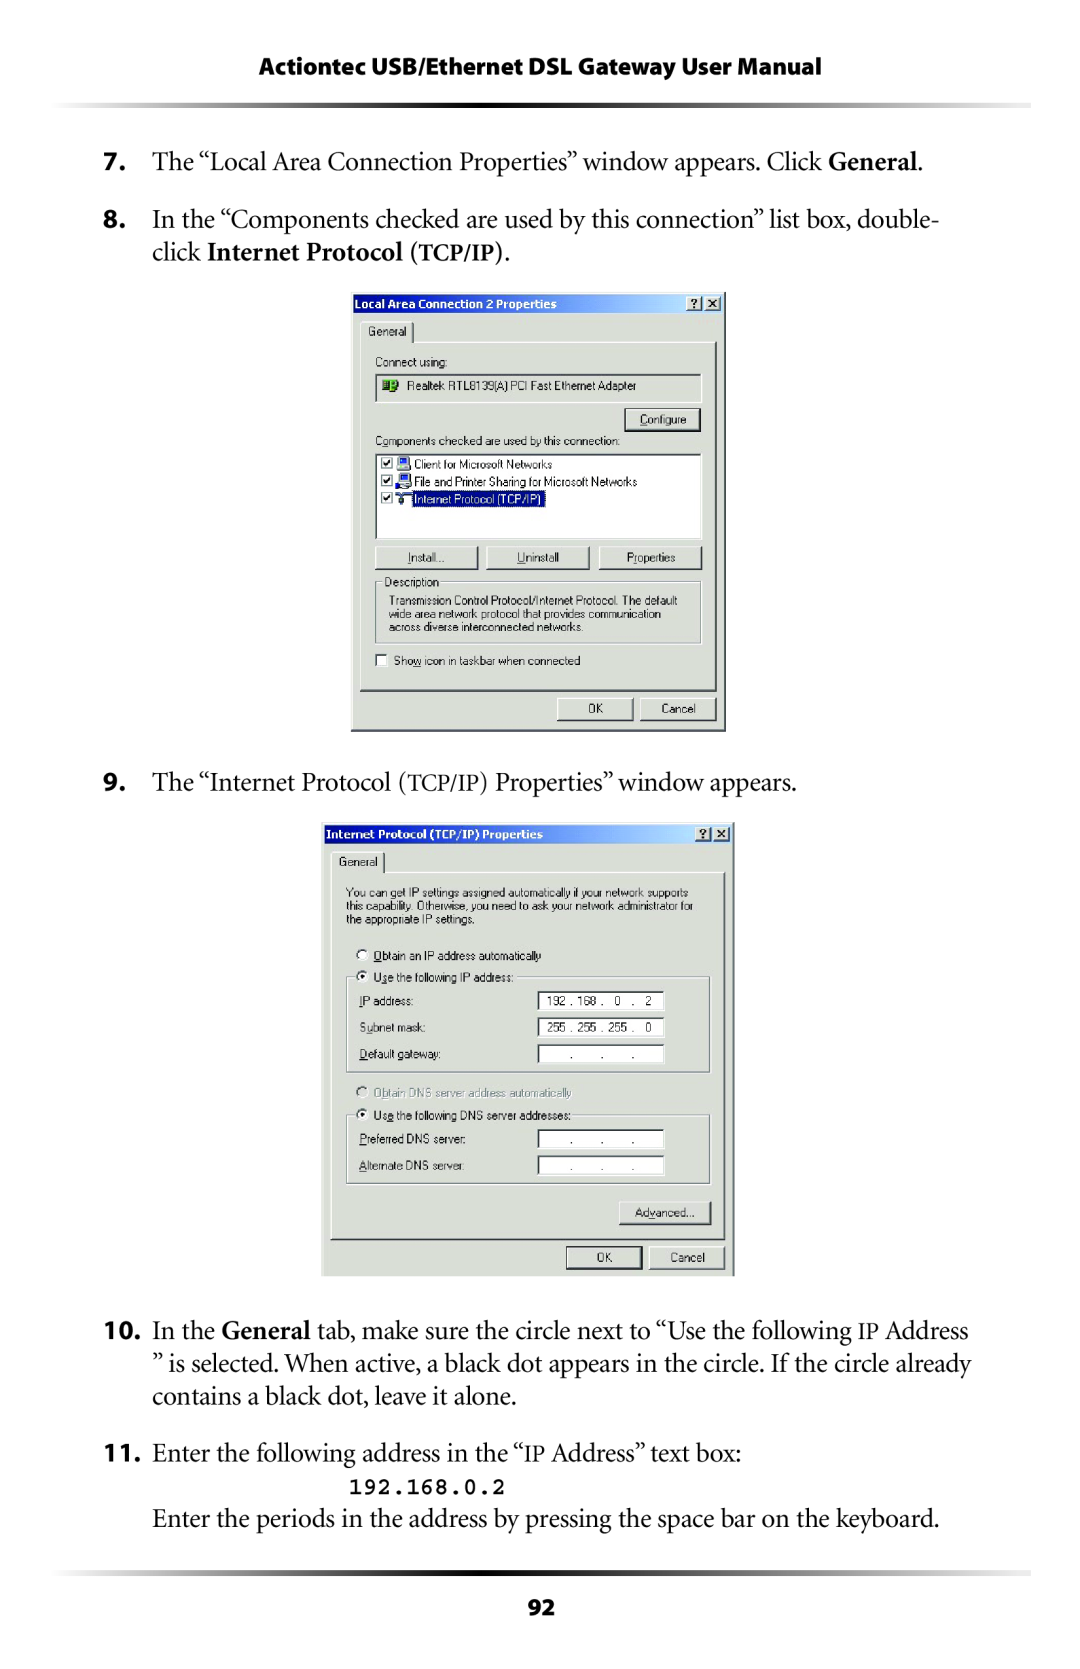 Gateway GT704 user manual The “Internet Protocol TCP/IP Properties” window appears 